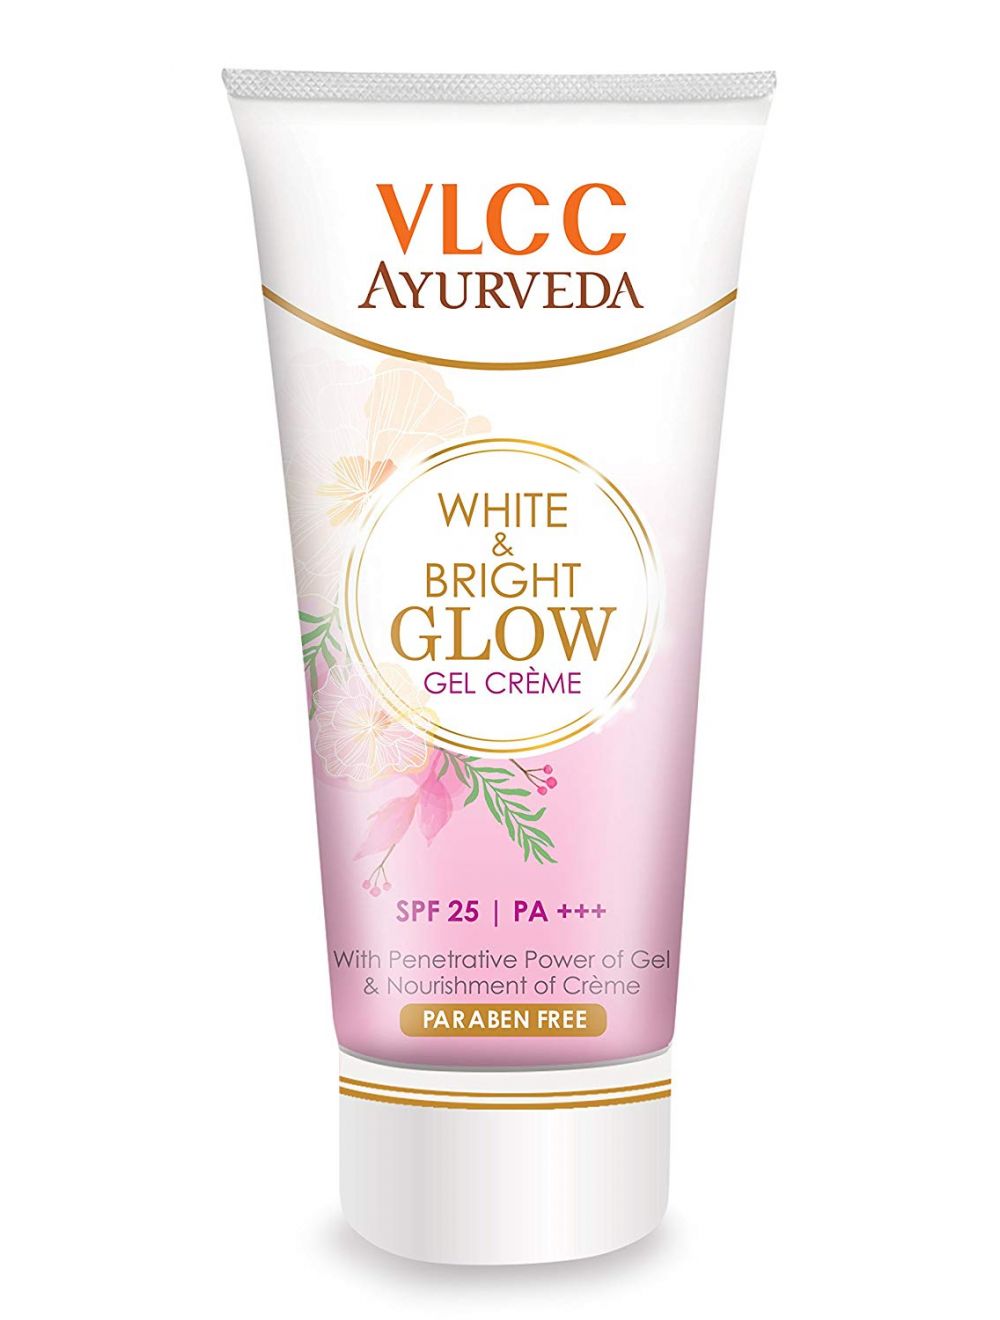 VLCC Diamond Facial Kit + Free White & Bright Glow Gel - Niram